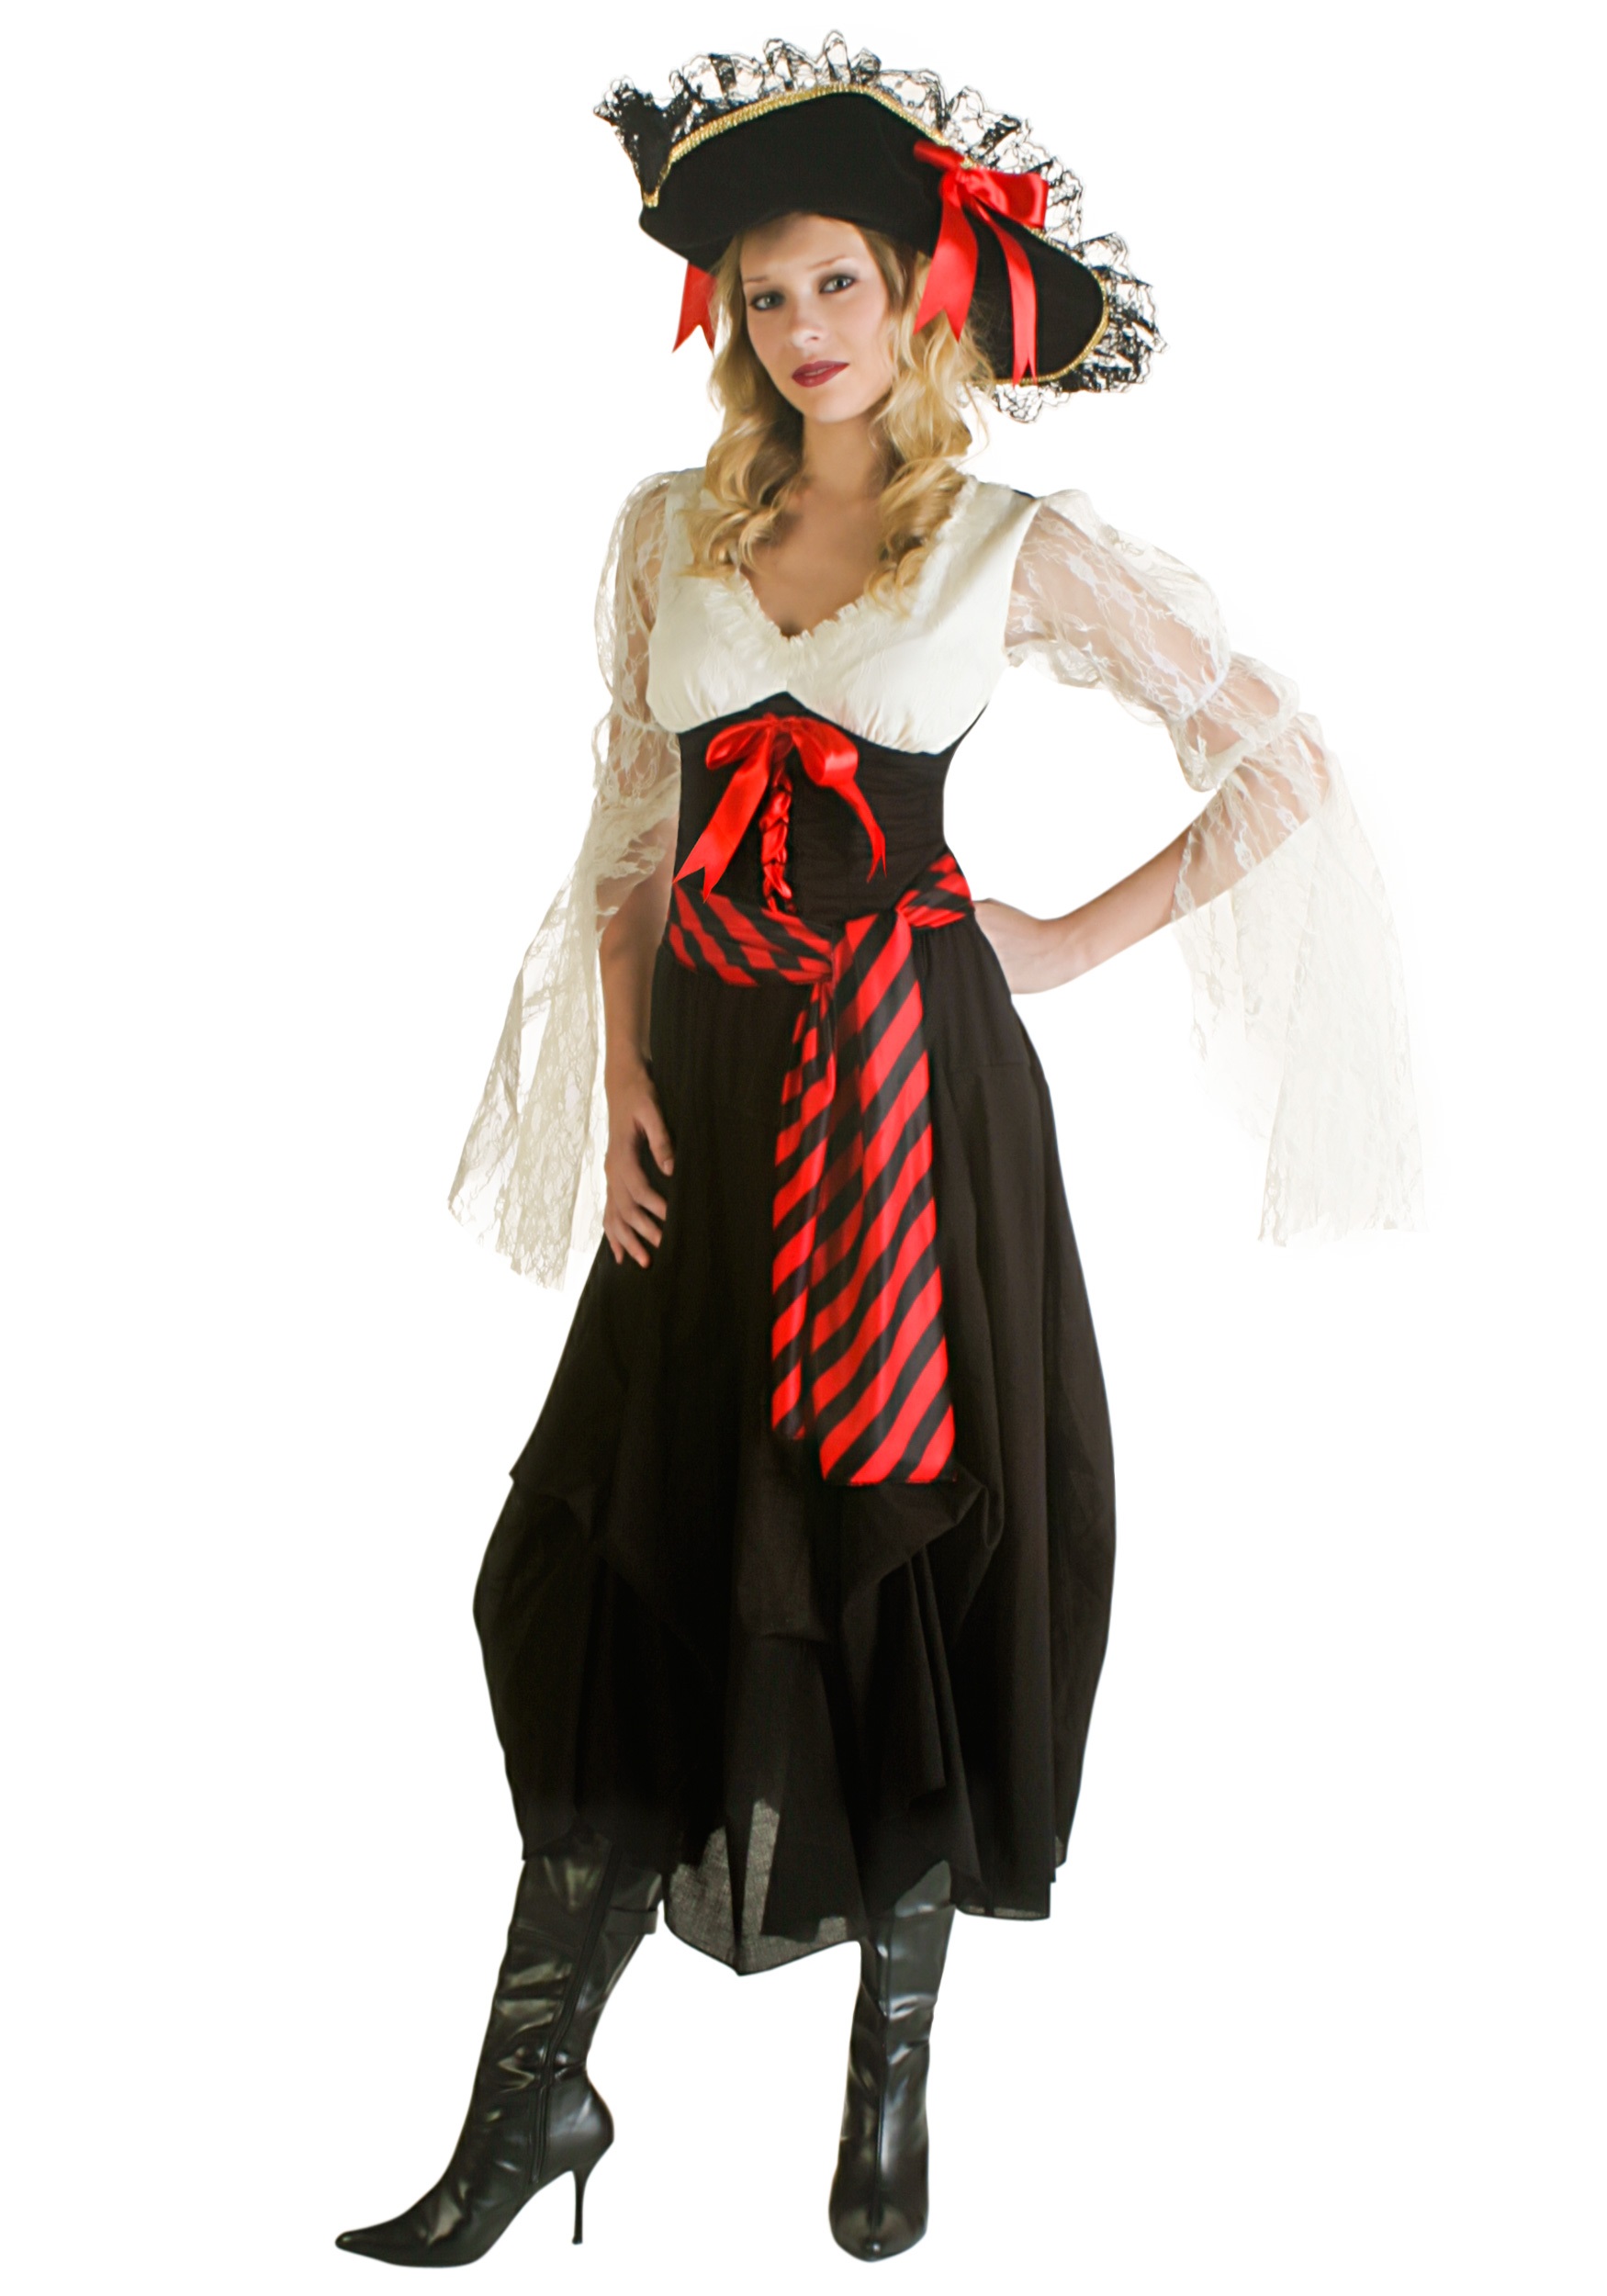 Sexy Female Pirate Costume Halloween Costume Ideas 2019 6883